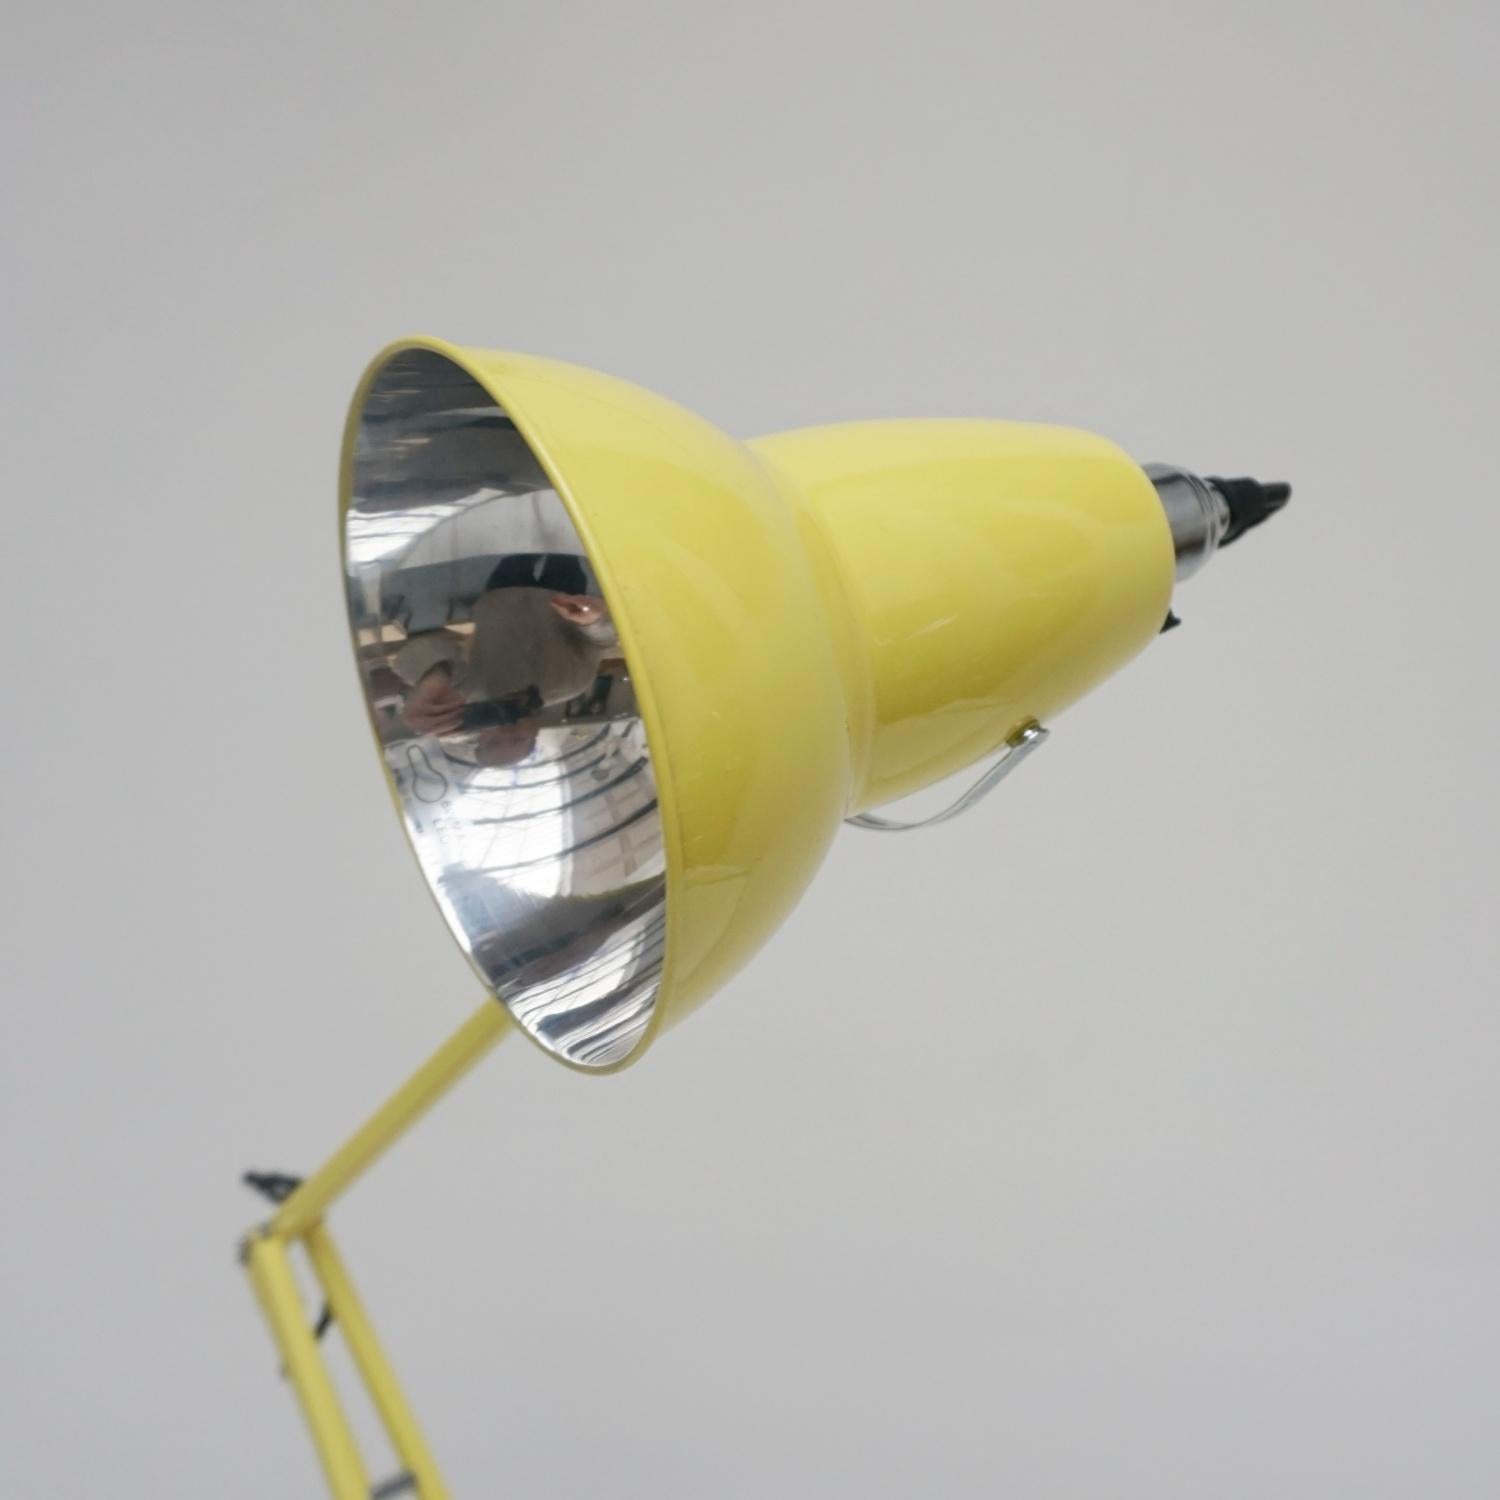 English Original 1950's Herbert Terry & Sons Anglepoise Desk Lamp Repainted Yellow